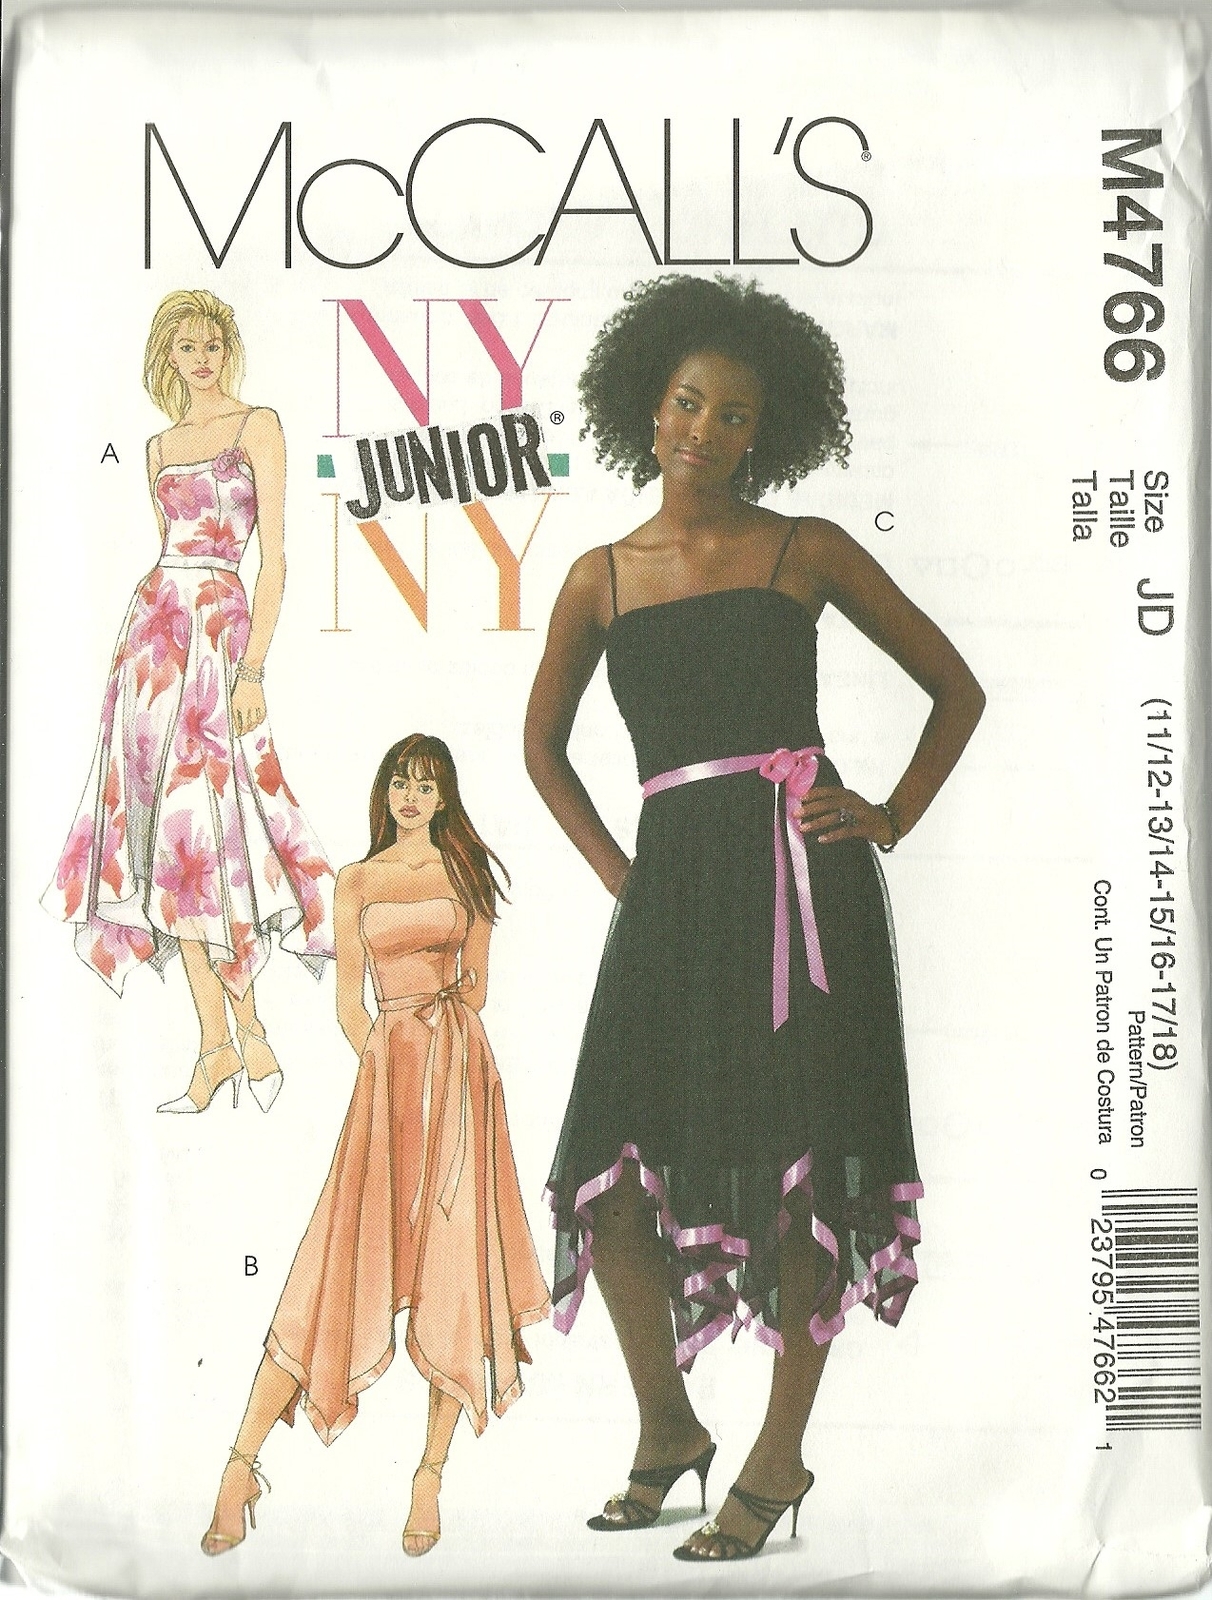 McCall's Sewing Pattern 4766 Misses Junior Dress Sz 11 12 13 14 15 16 17 18 New - $9.99